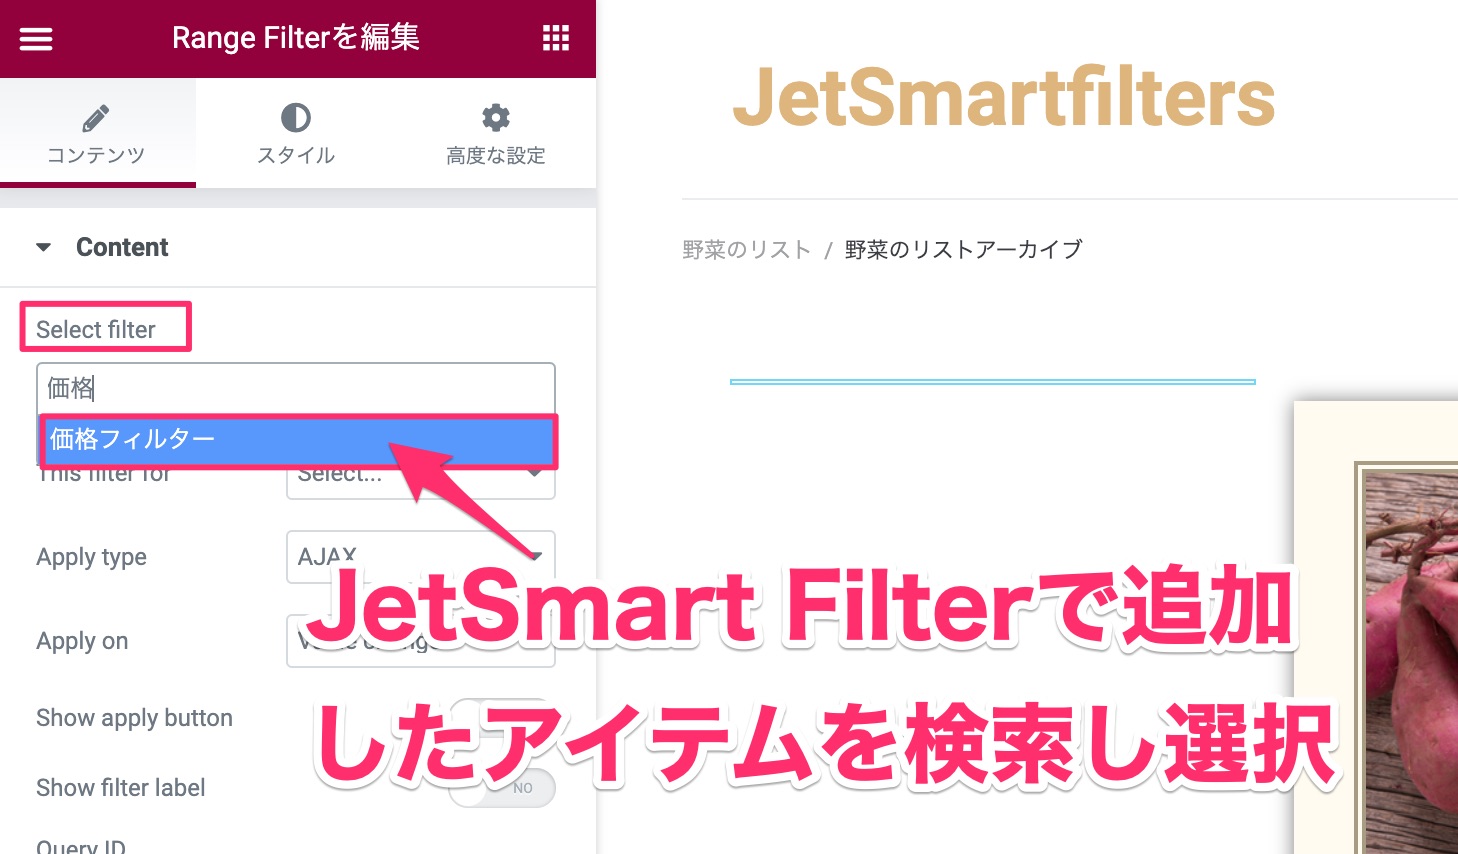 『Select Filter』で『価格フィルター』を検索し選択